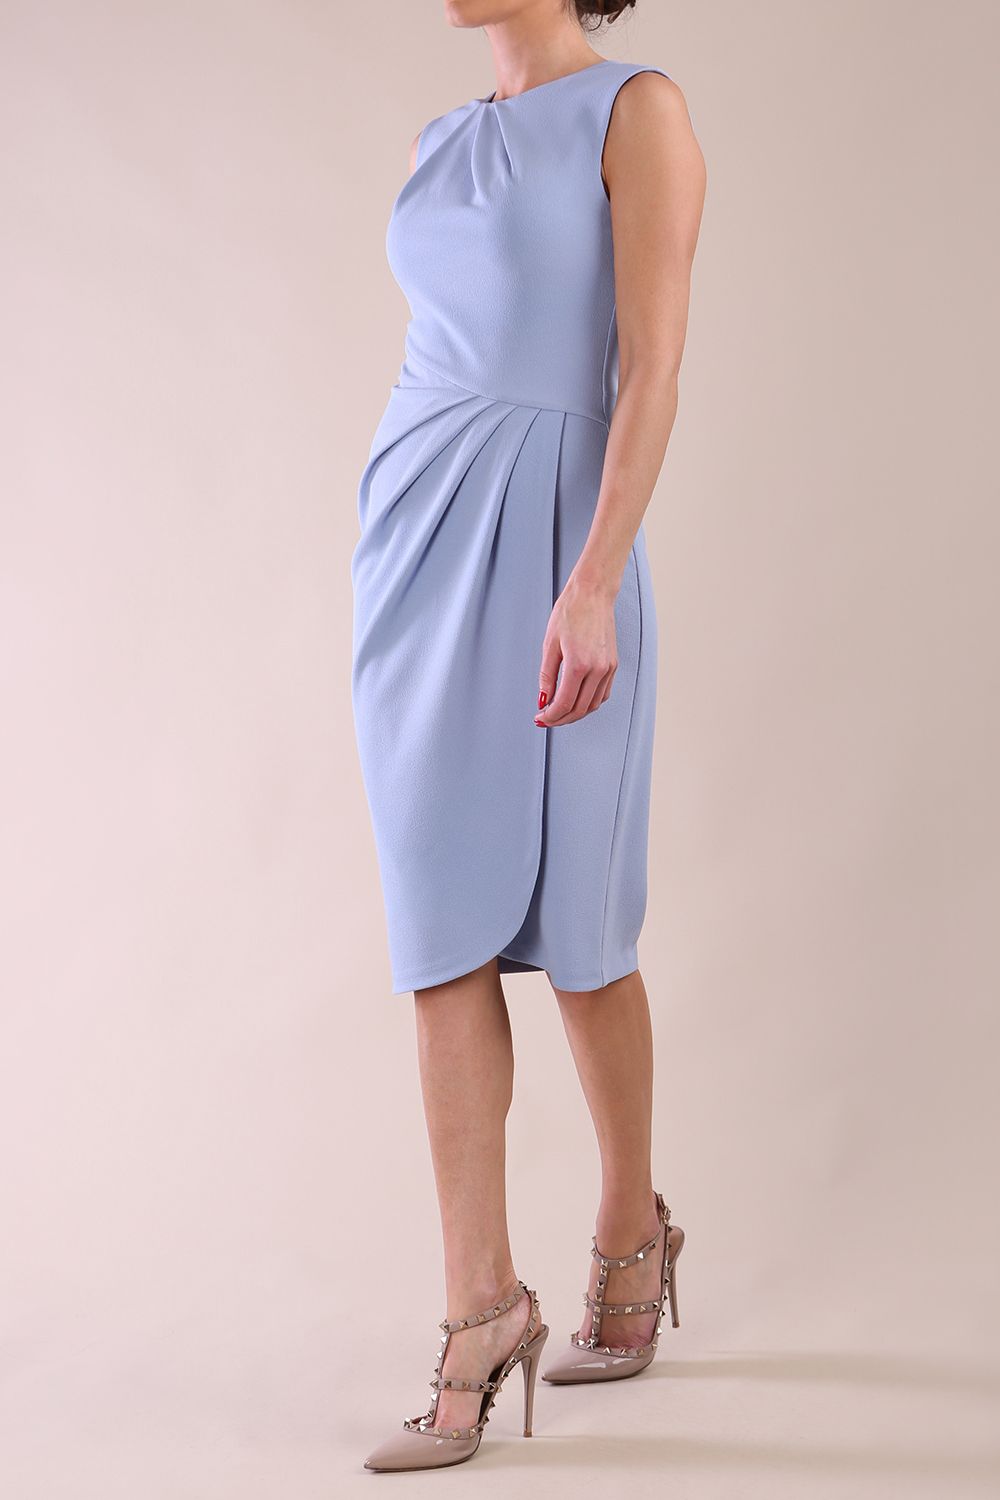 Model wearing diva catwalk Biscay Sleeveless Pleating pencil skirt dress in Powder Blue